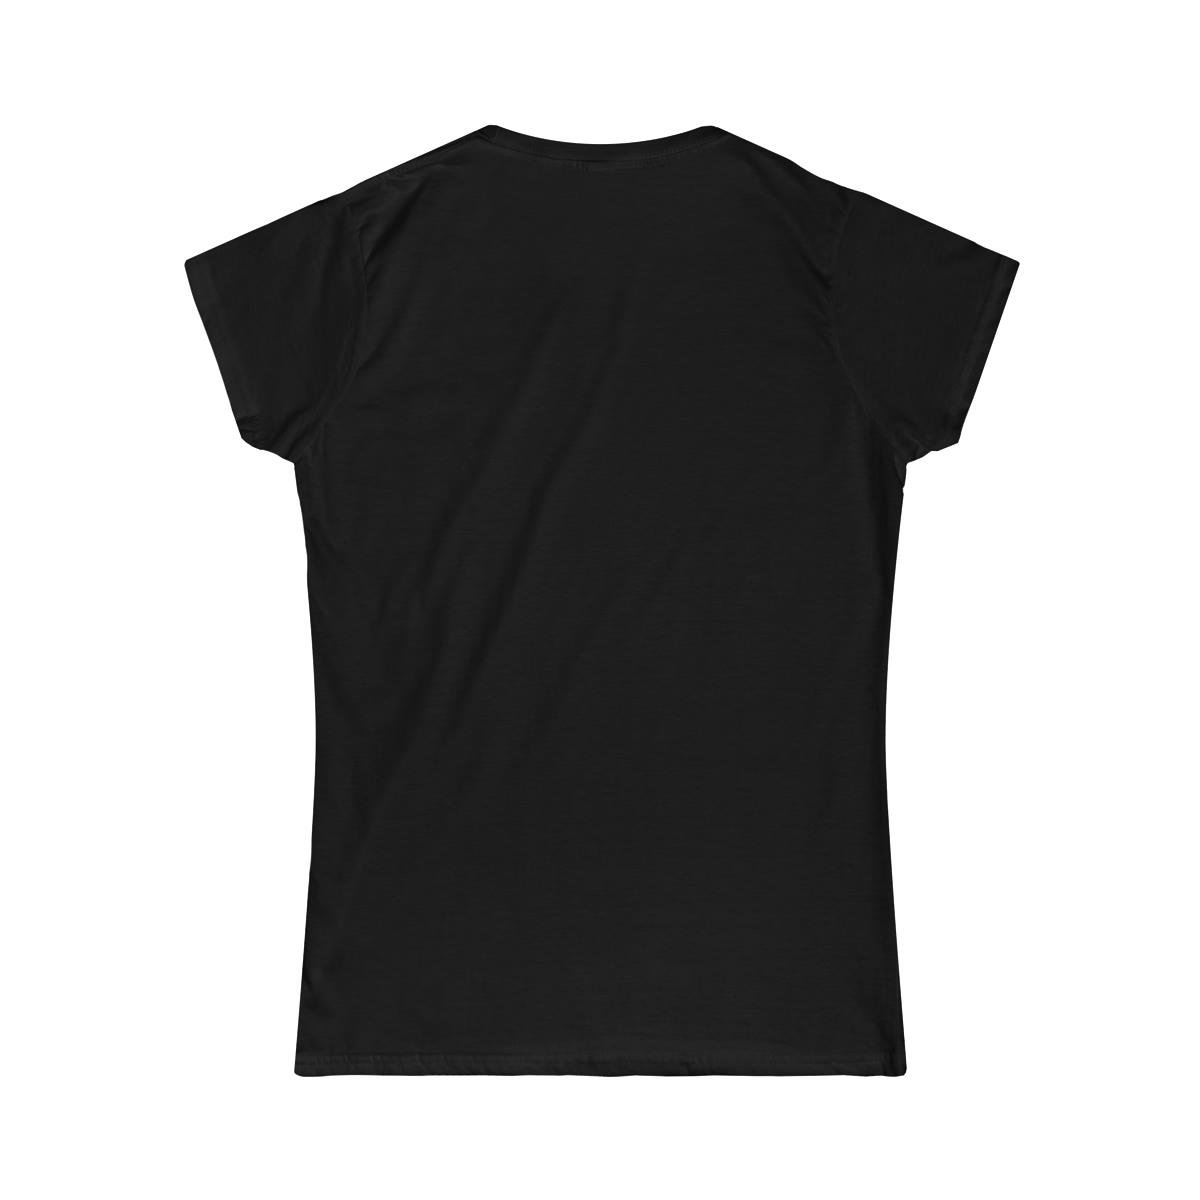 AfterWinter – Paramnesia Women’s Short Sleeve Tshirt